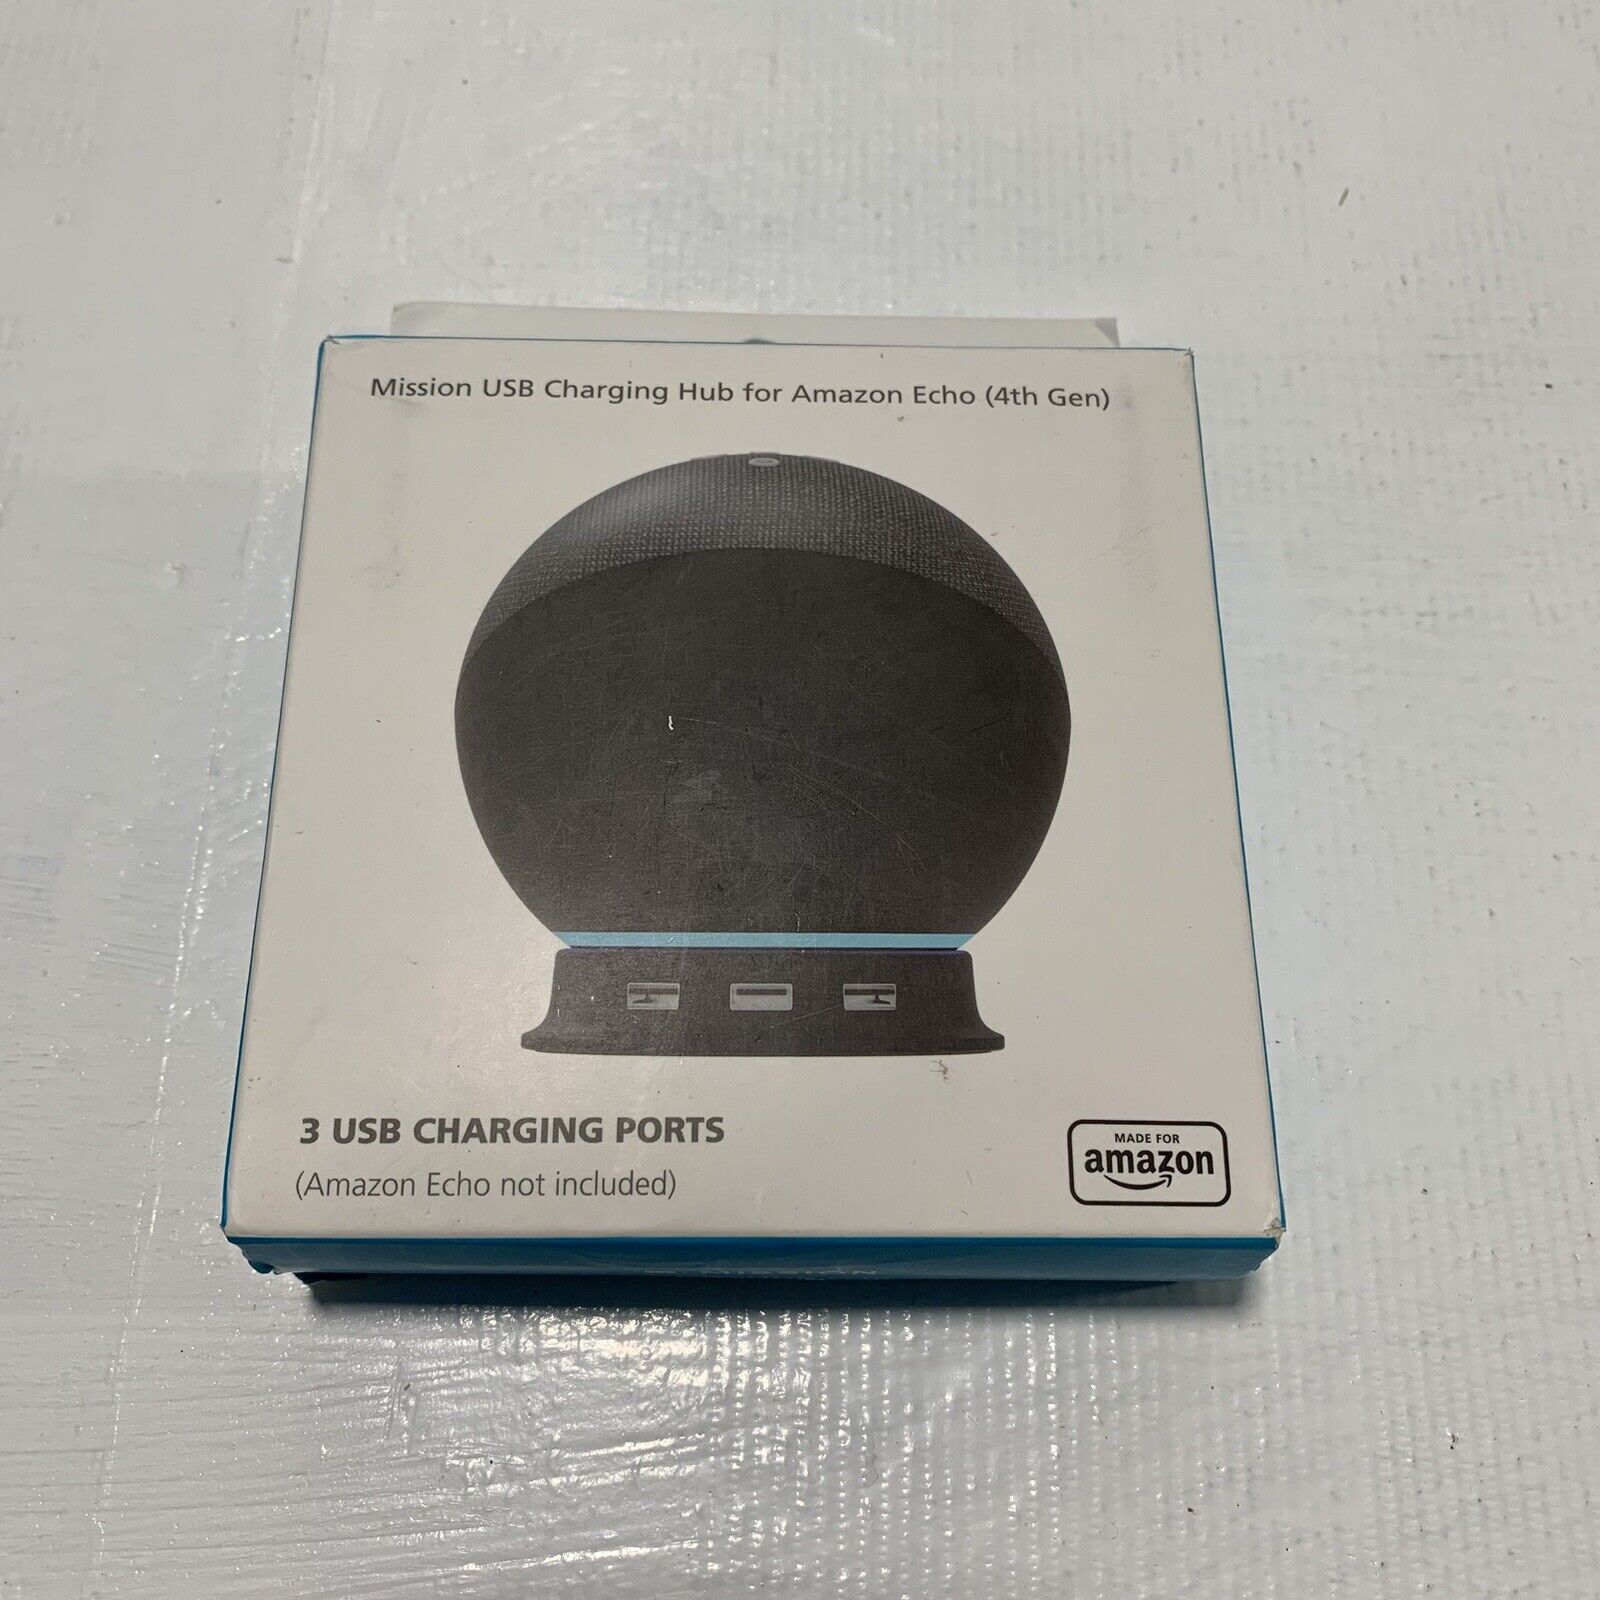 Mission USB Charging Hub for Amazon Echo (4th Gen)